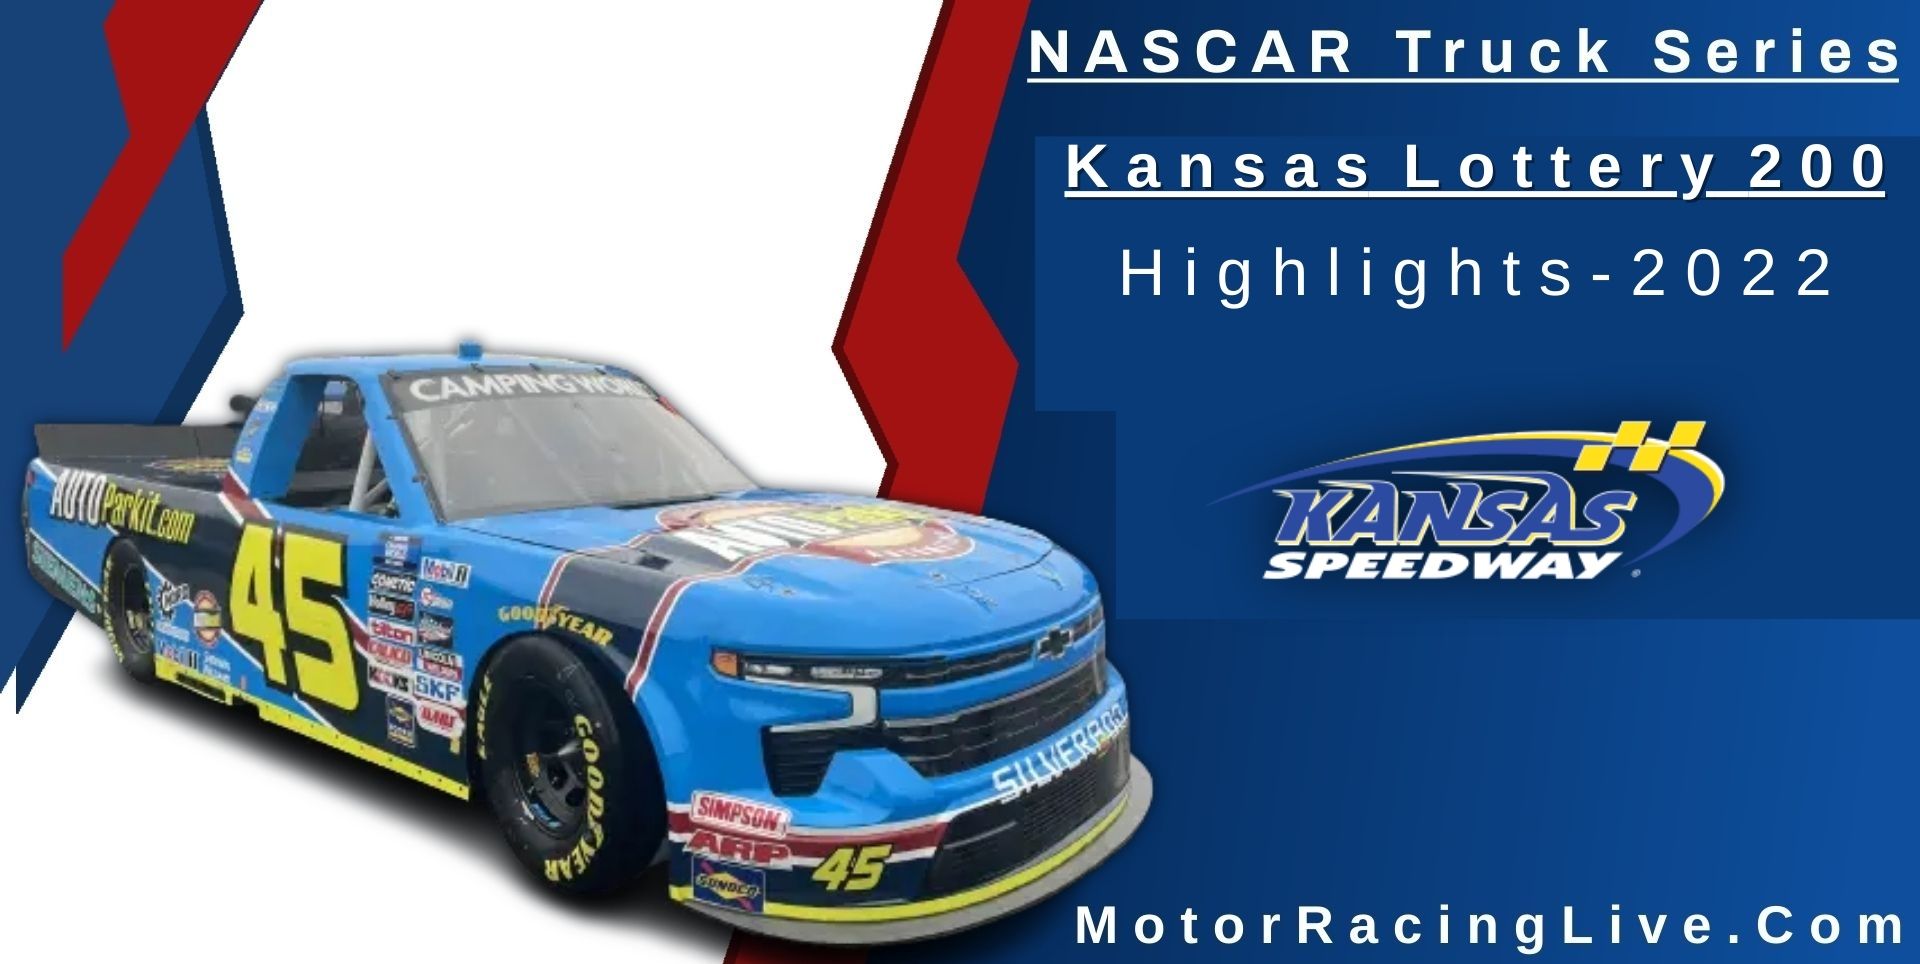 Kansas Lottery 200 Highlights 2022 NASCAR Truck